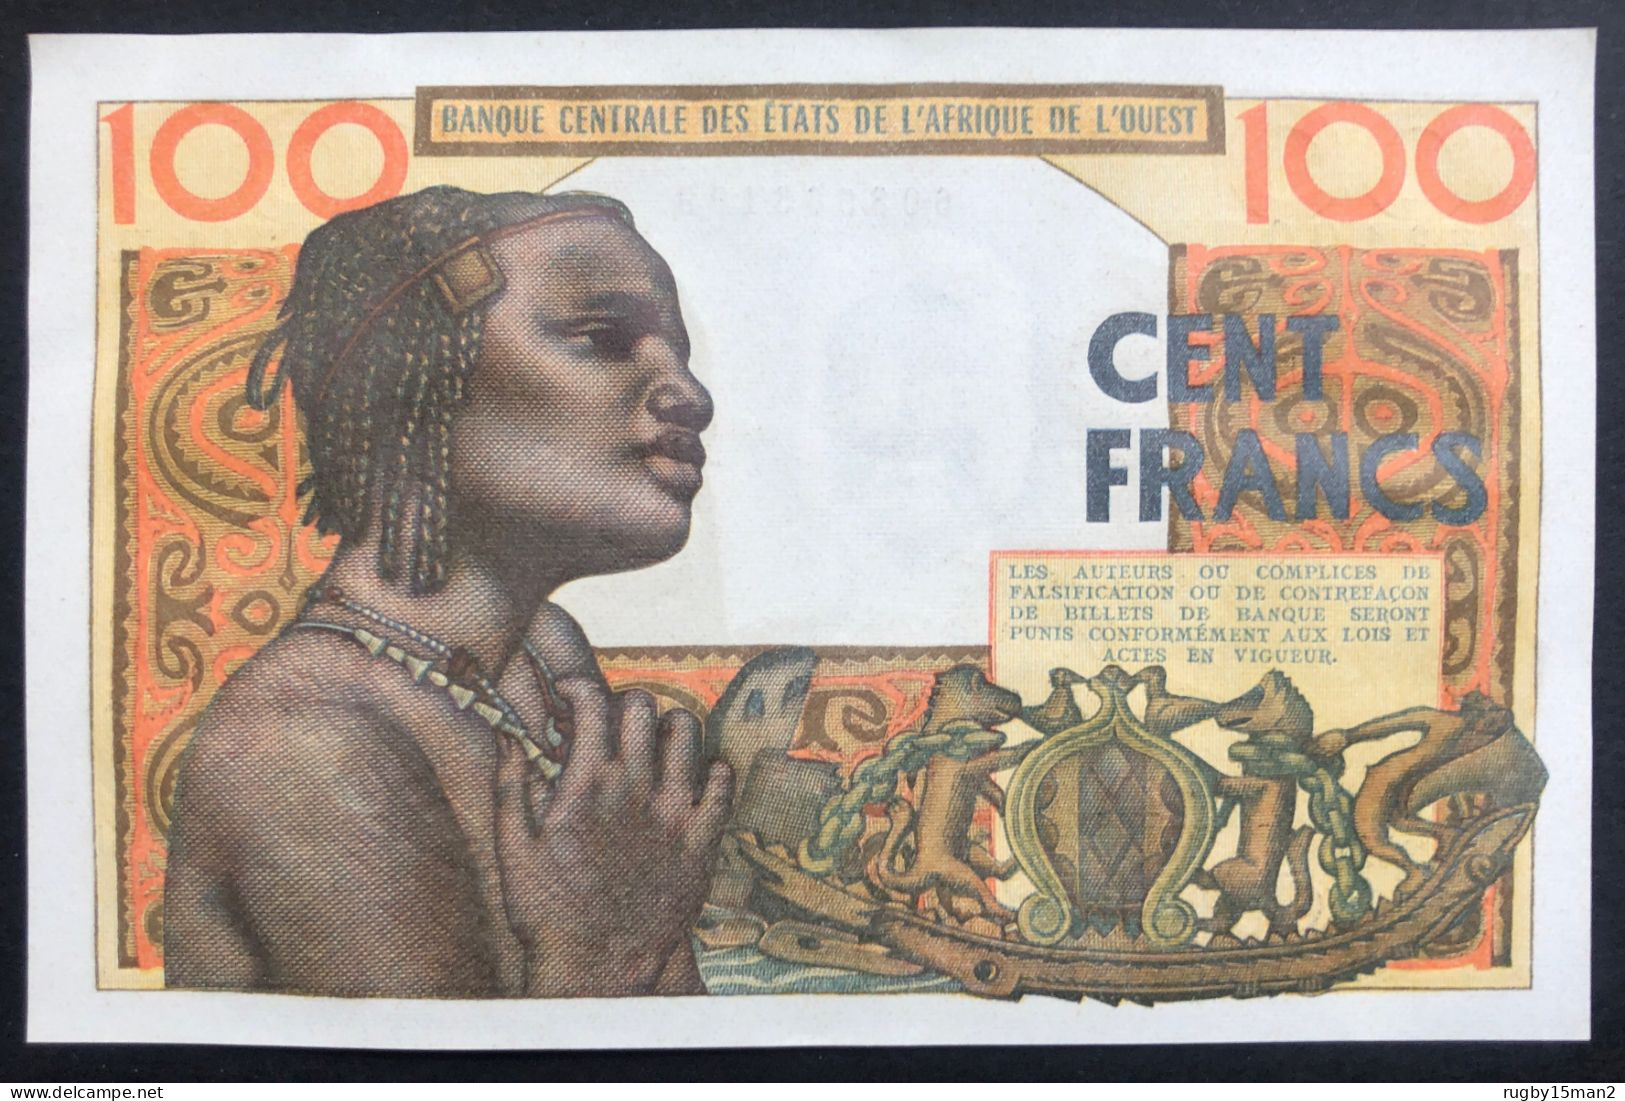 N°36 BILLET DE BANQUE DE 100 FRANCS DU BÉNIN 1965 NEUF / UNC (Rare) - Bénin